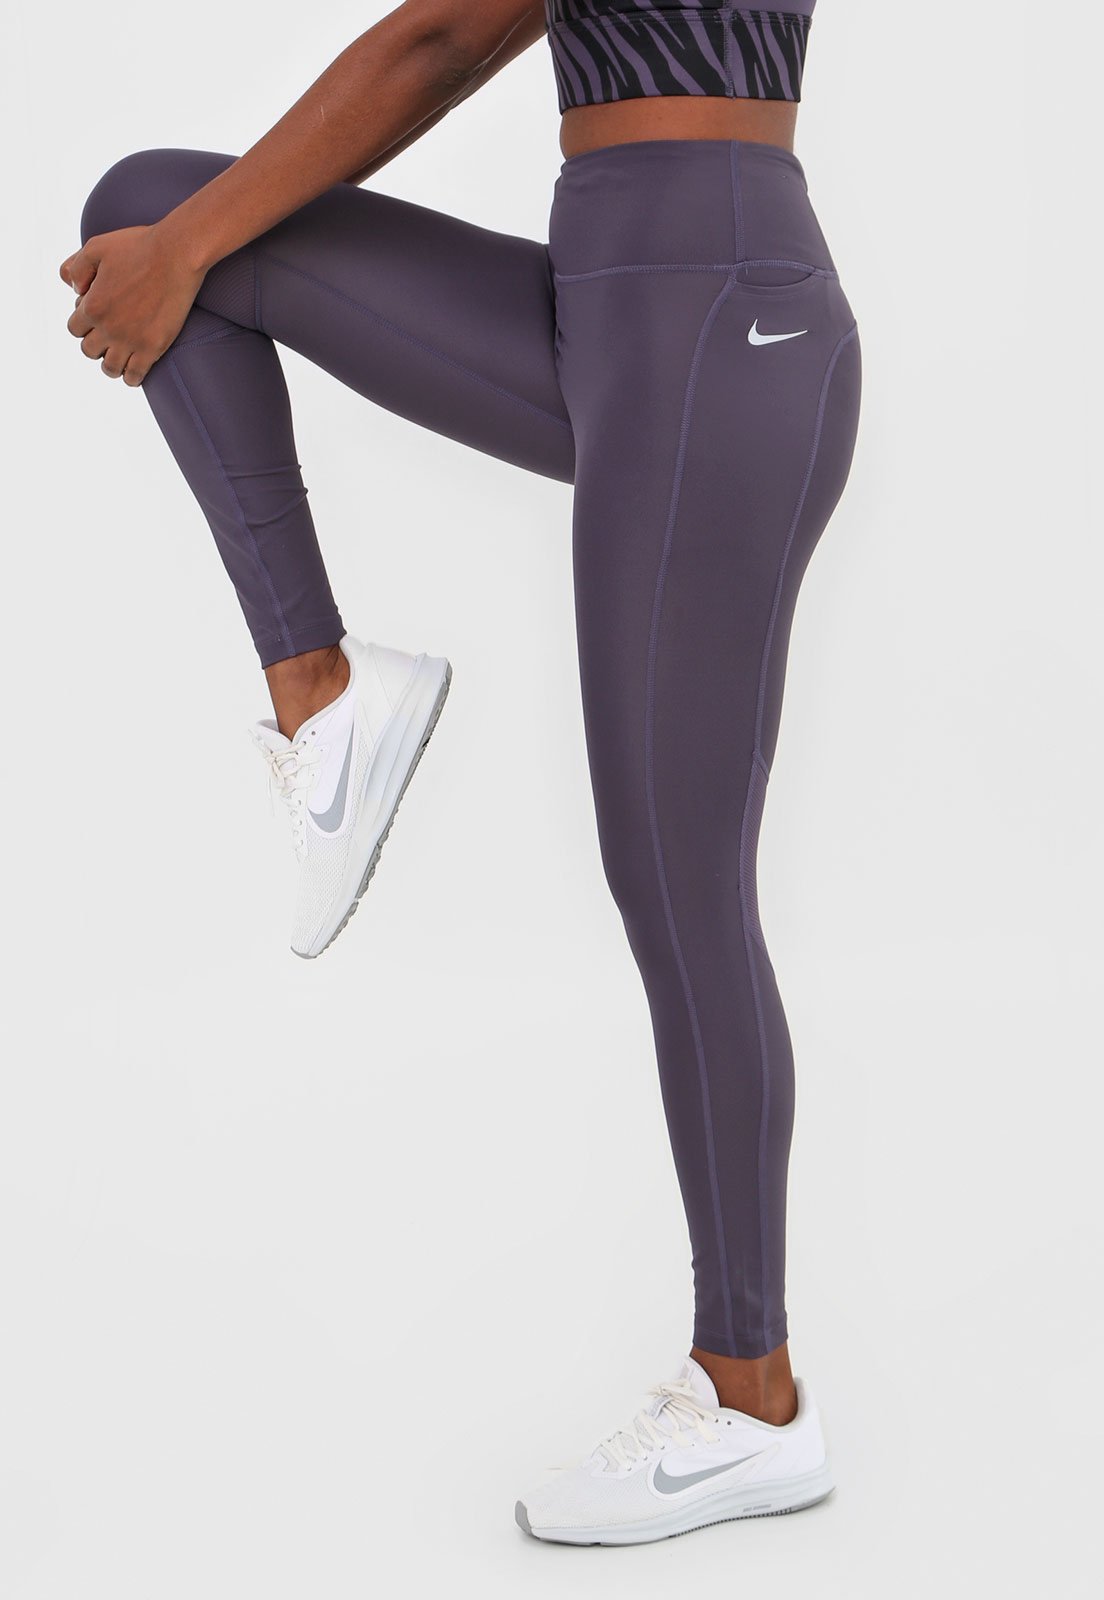 Calça Legging Nike Epic Fast Tight Feminina - Original